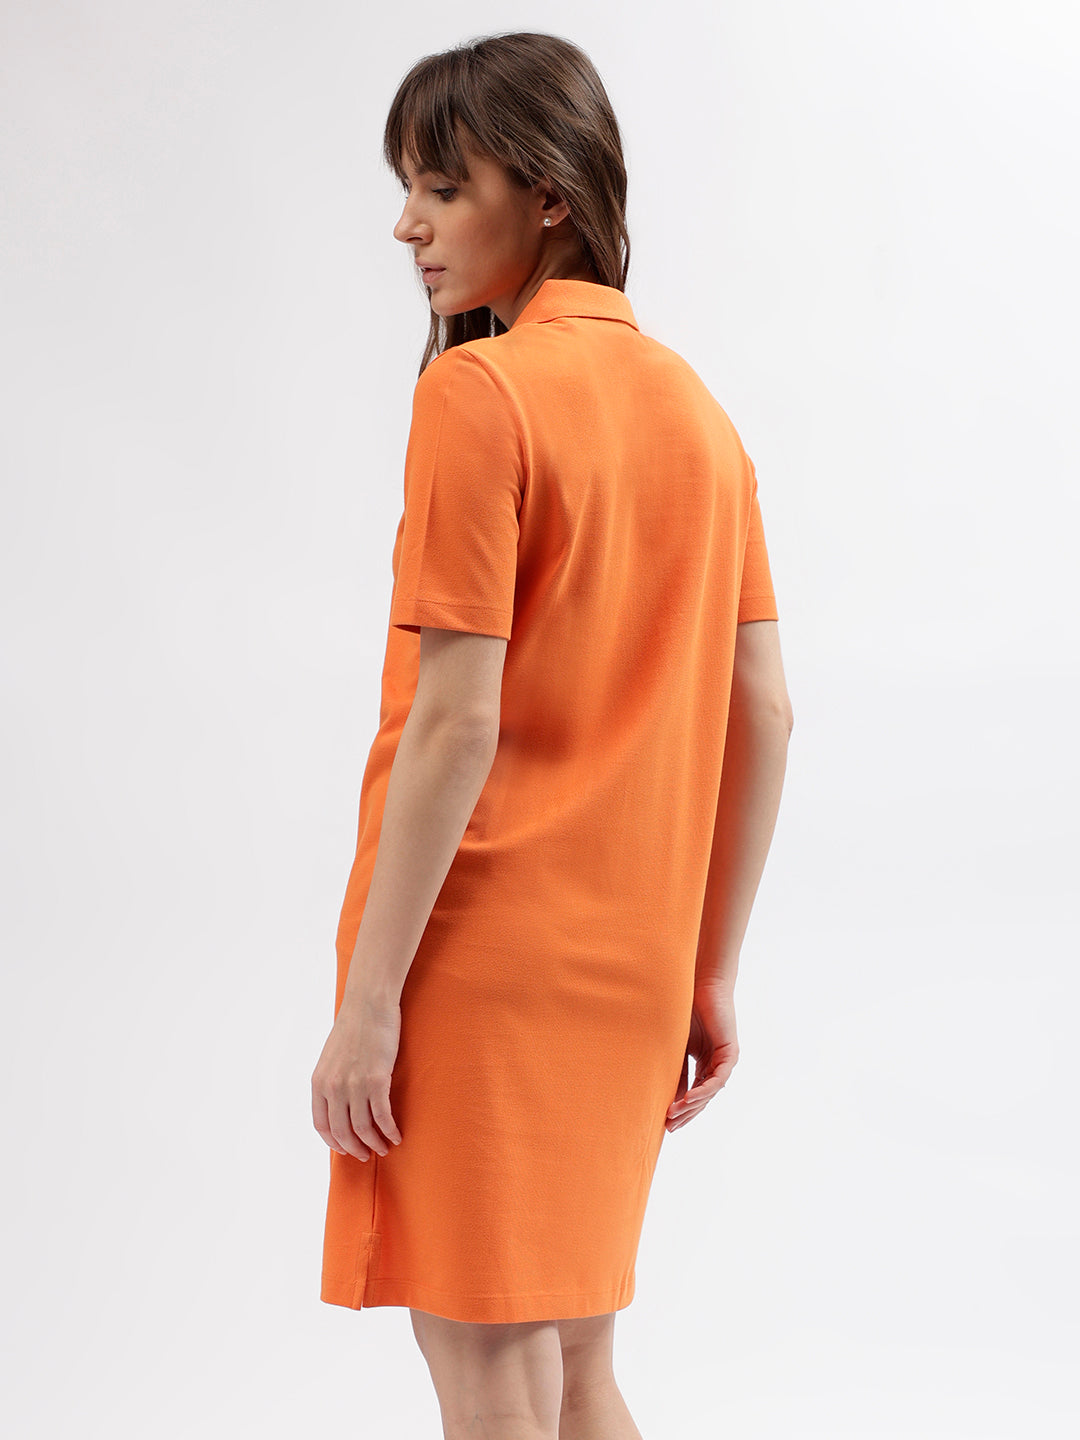 Gant Women Orange Solid Polo Collar Short Sleeves Dress